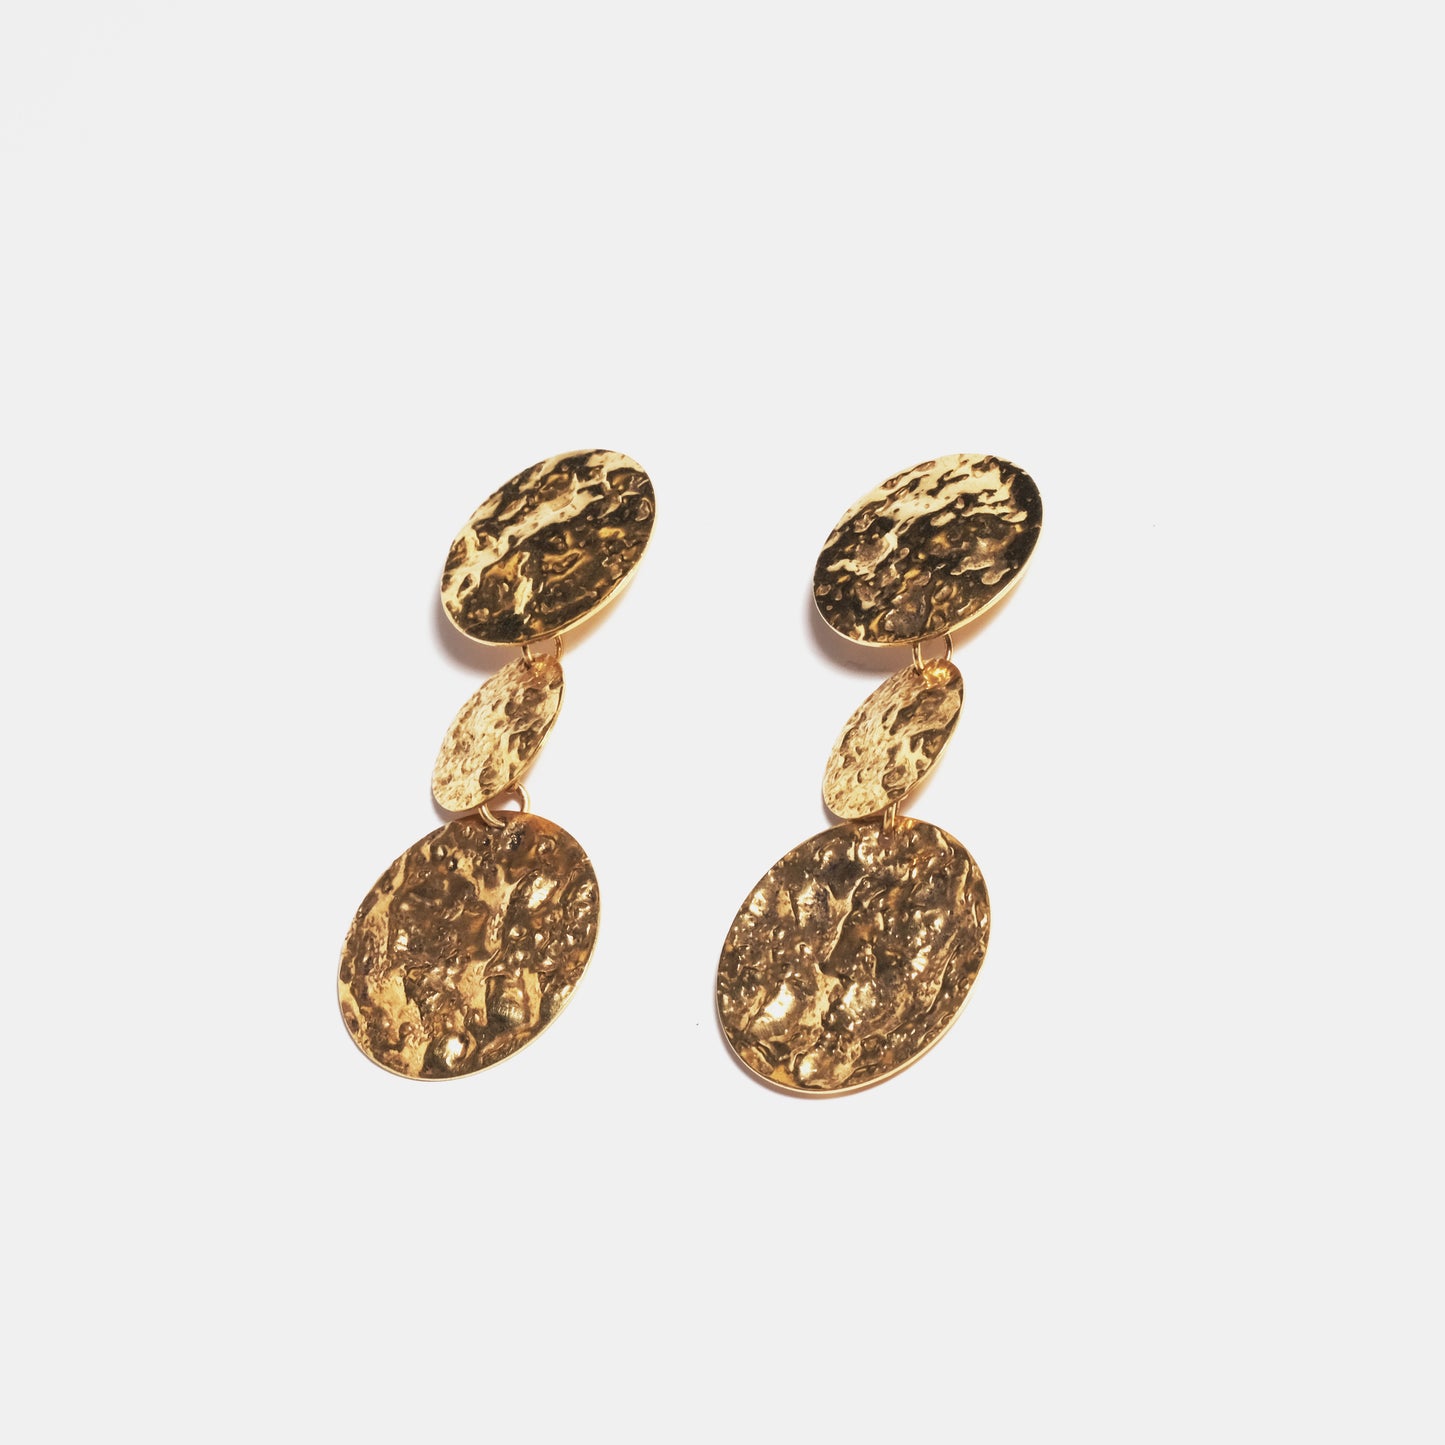 "Moona" earrings